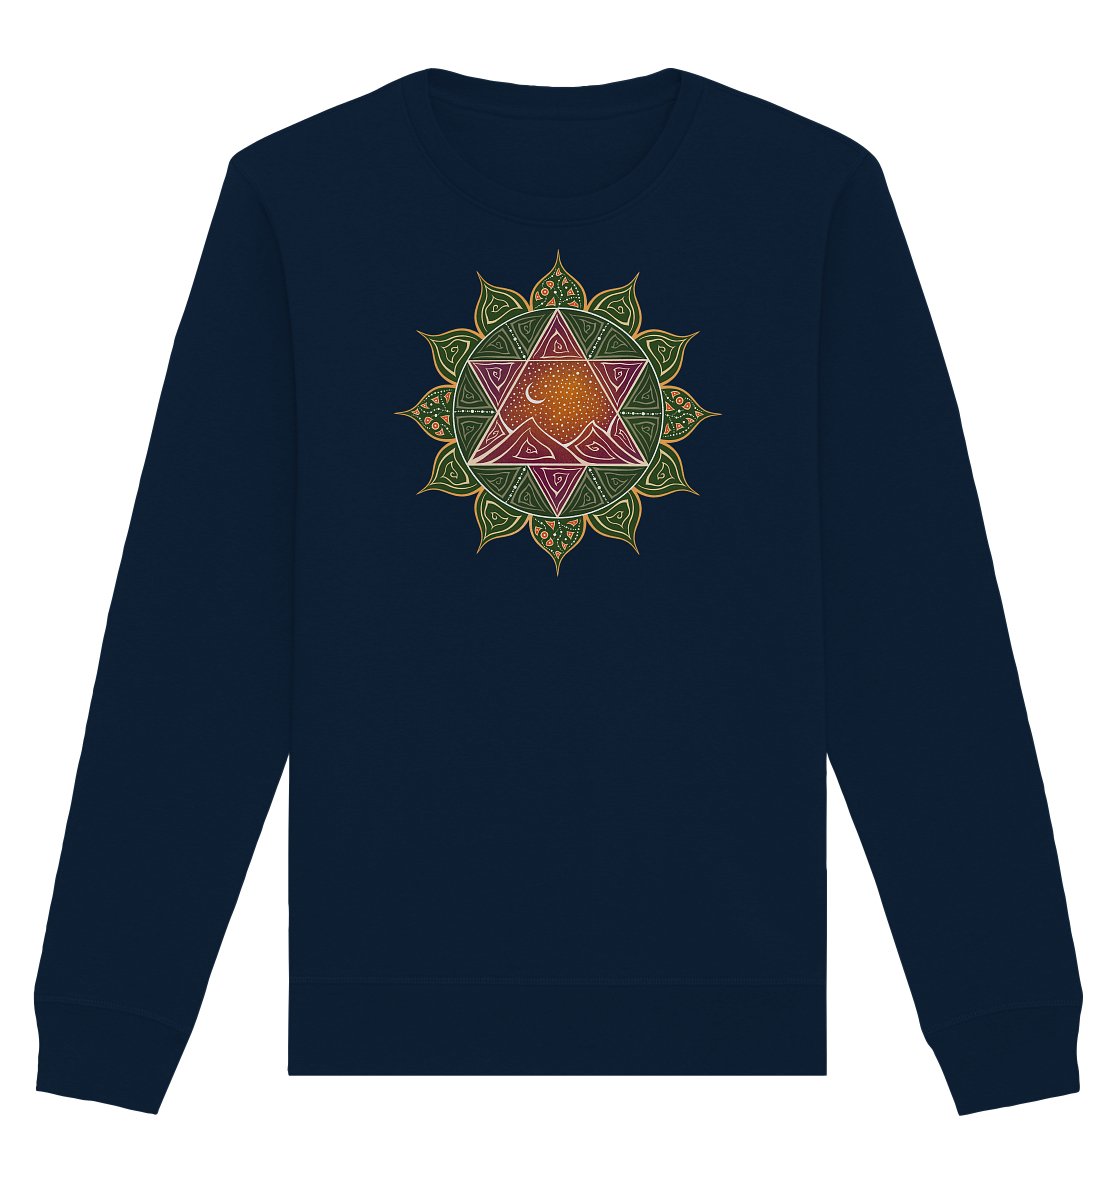 Herzchakra | Anahata Chakra | Organisches Unisex Sweatshirt - Organic Basic Unisex Sweatshirt - Deivi